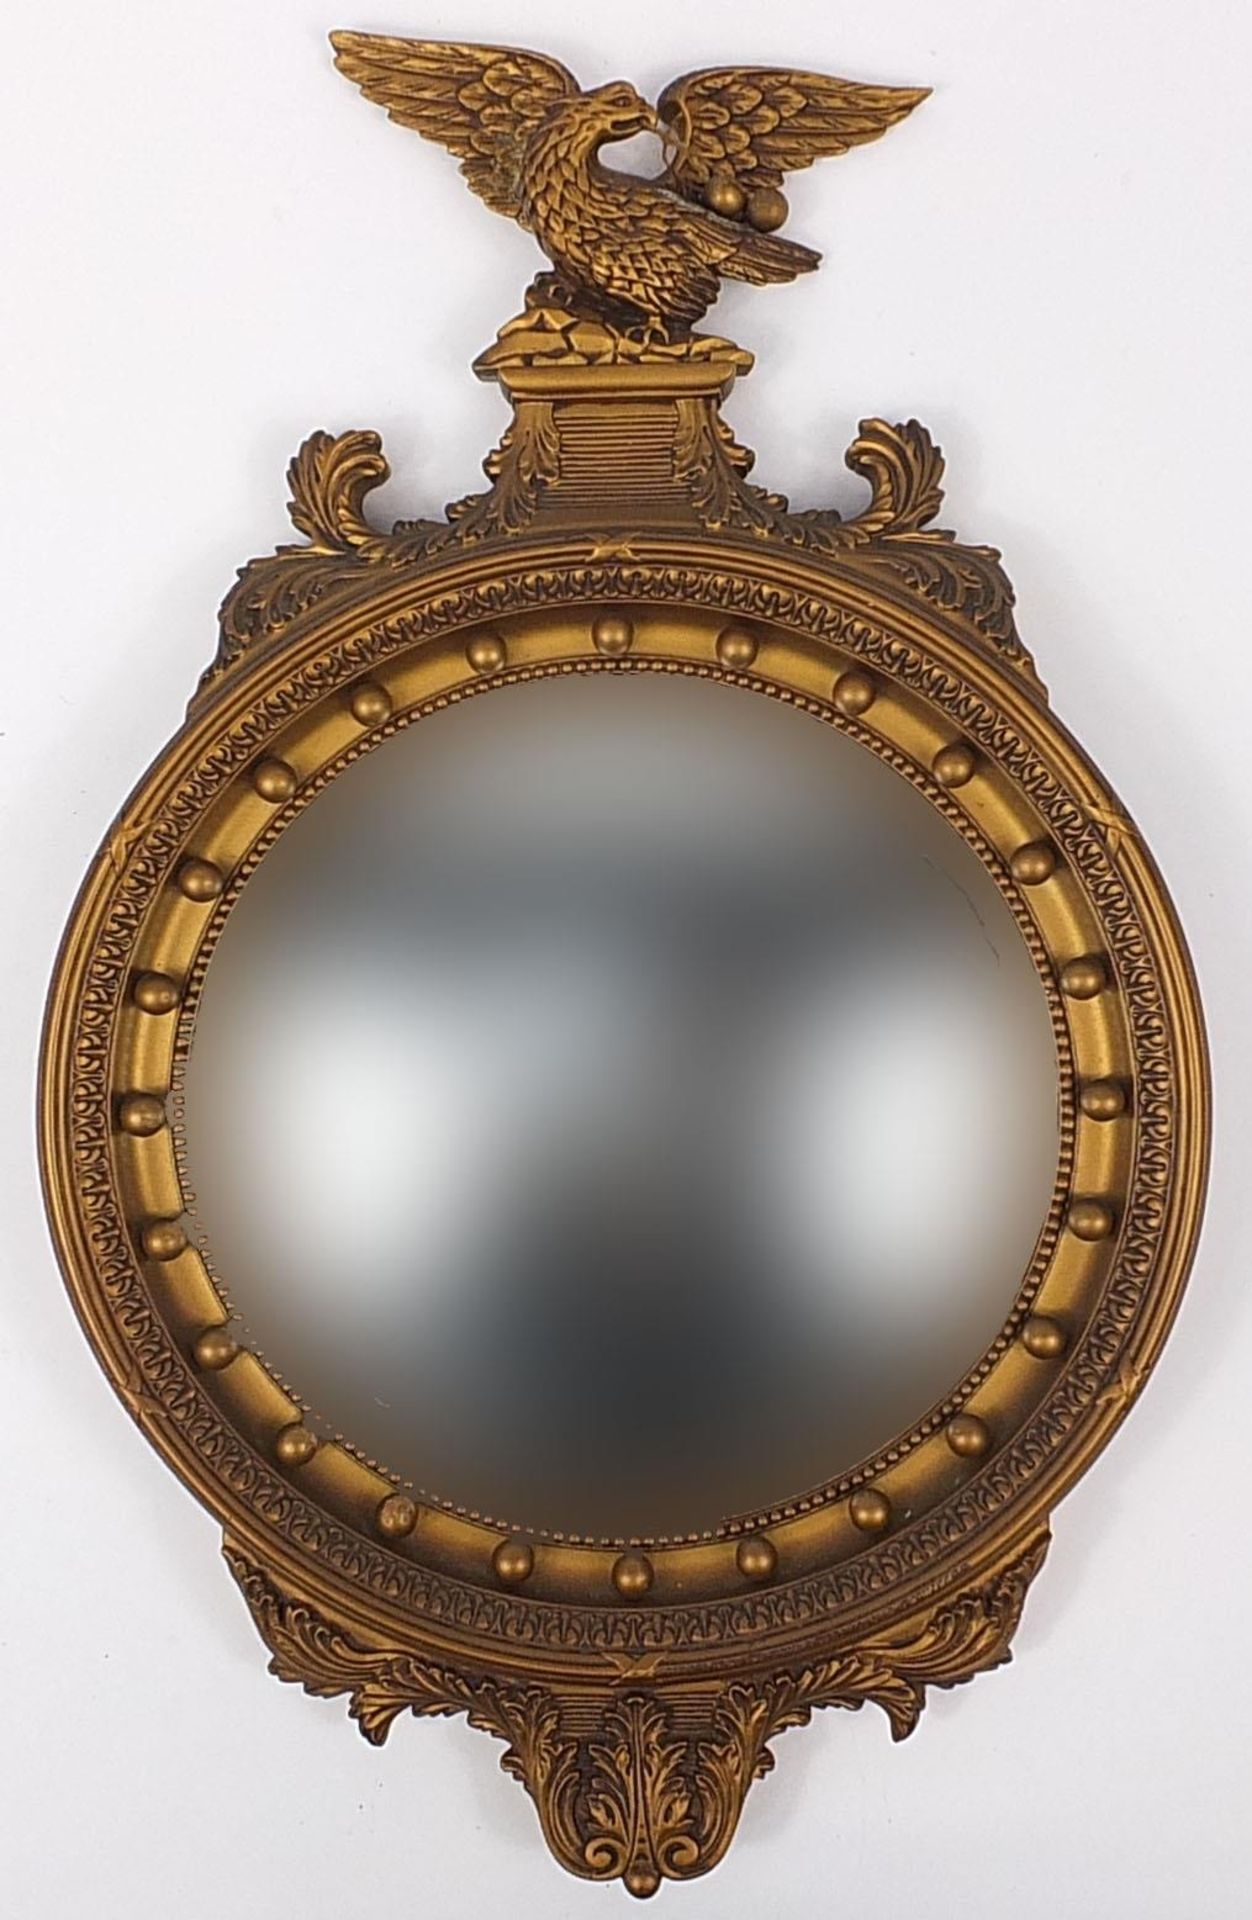 Gilt framed convex mirror with eagle crest, 67cm high x 42cm wide